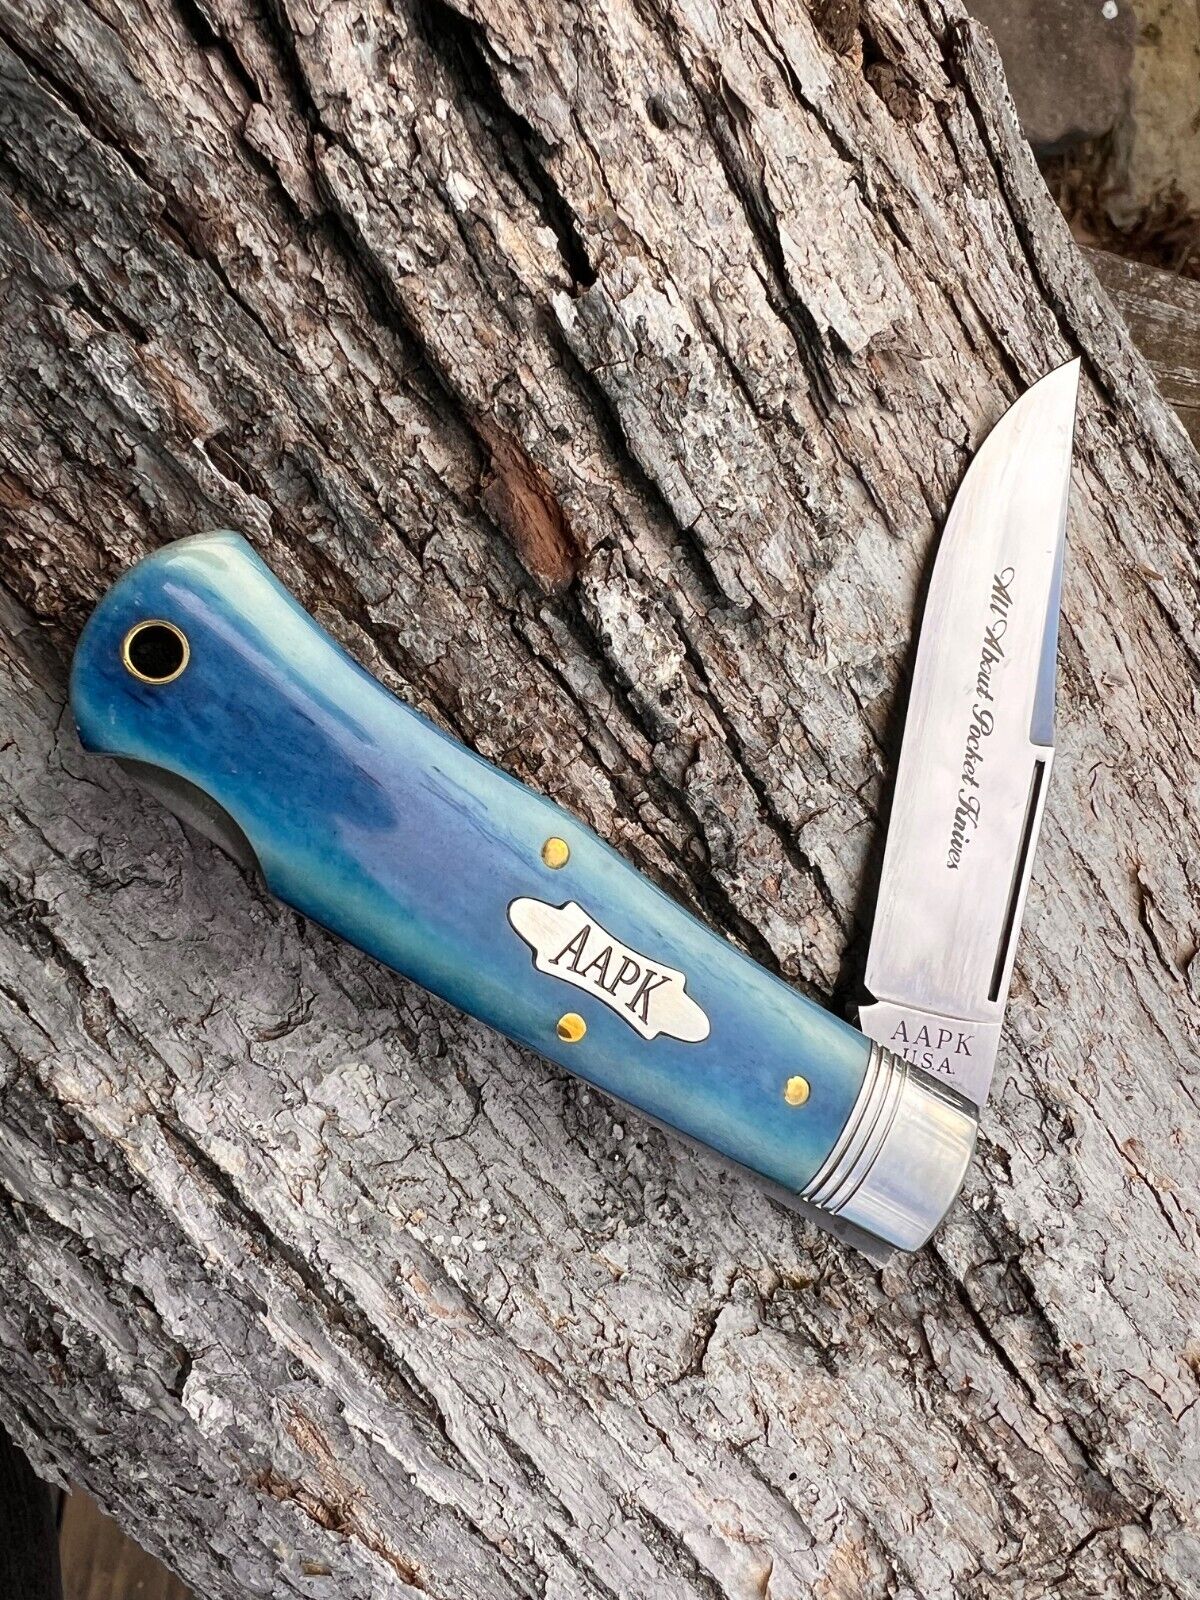 GEC 721123LB AAPK BLUE CAMEL CODY SCOUT LOCKBACK KNIFE KNIVES